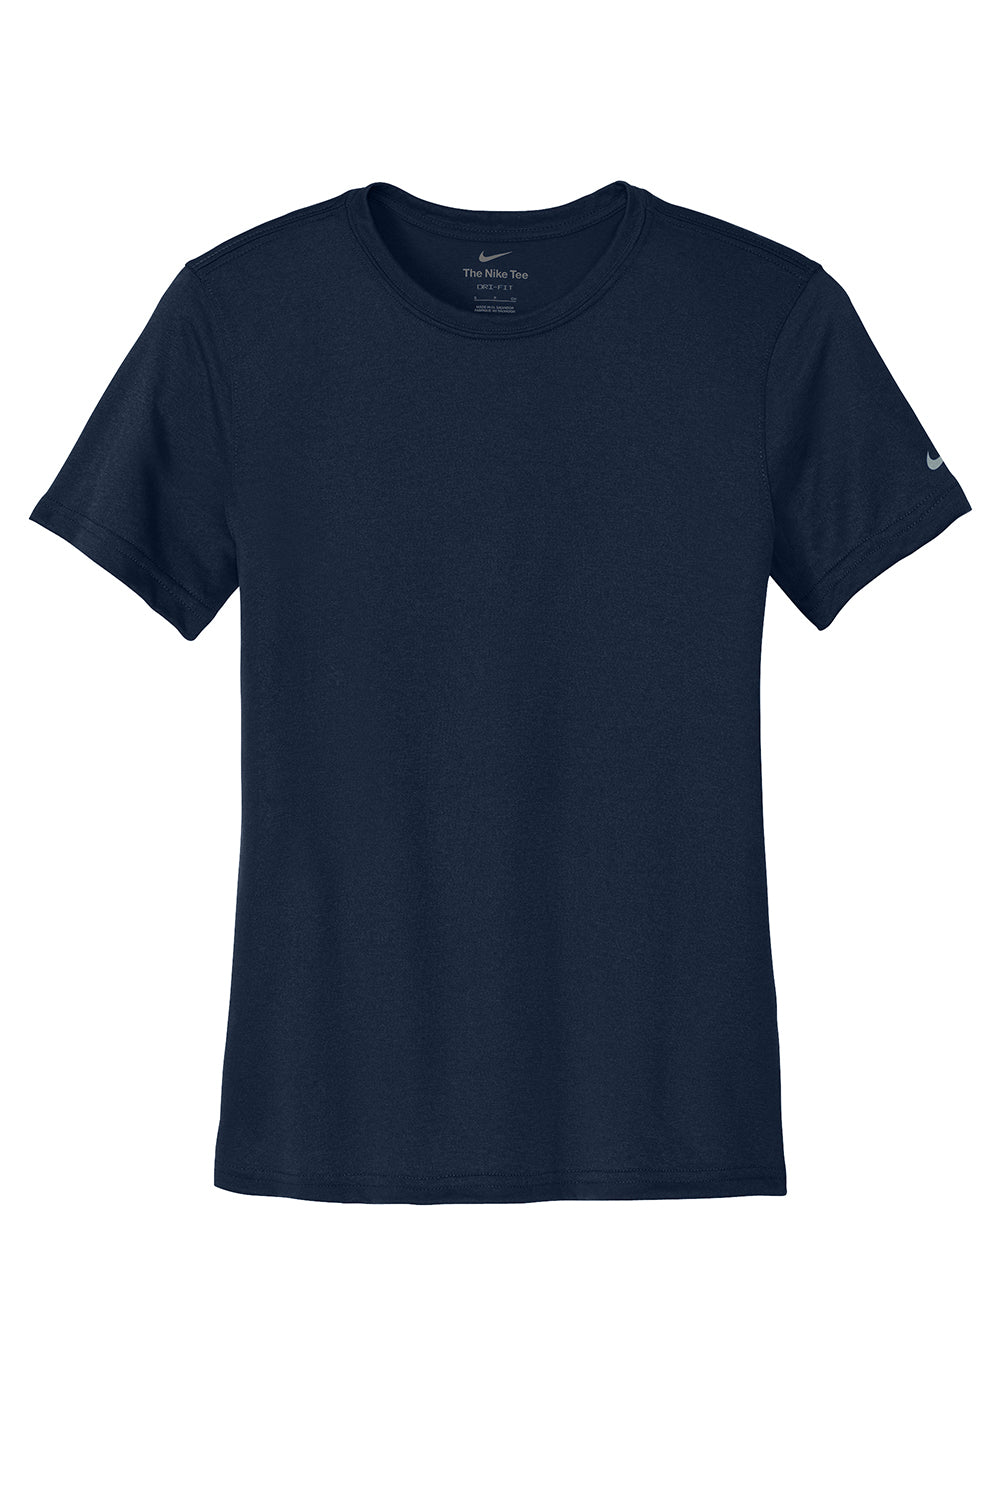 Nike NKDX8734 Womens rLegend Dri-Fit Moisture Wicking Short Sleeve Crewneck T-Shirt College Navy Blue Flat Front